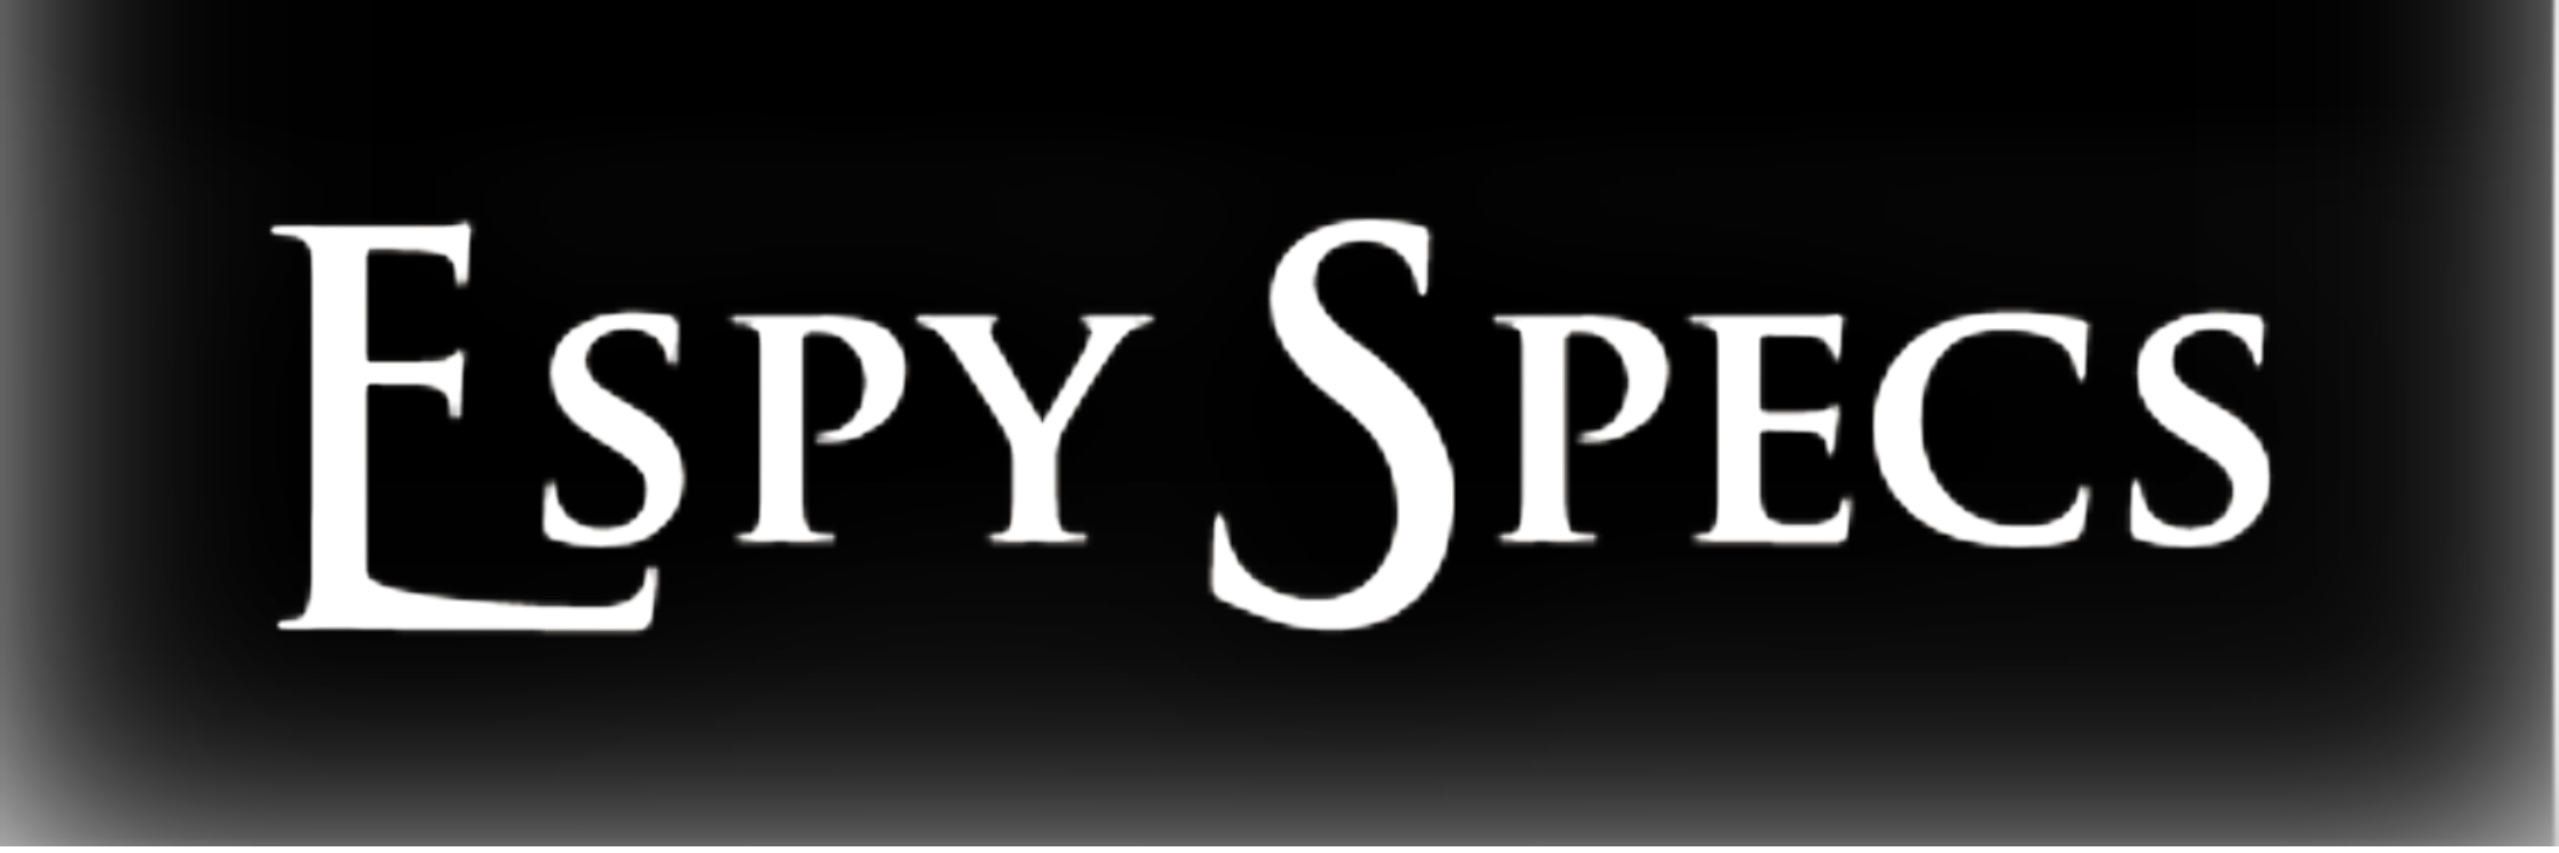 Espy Specs Logo